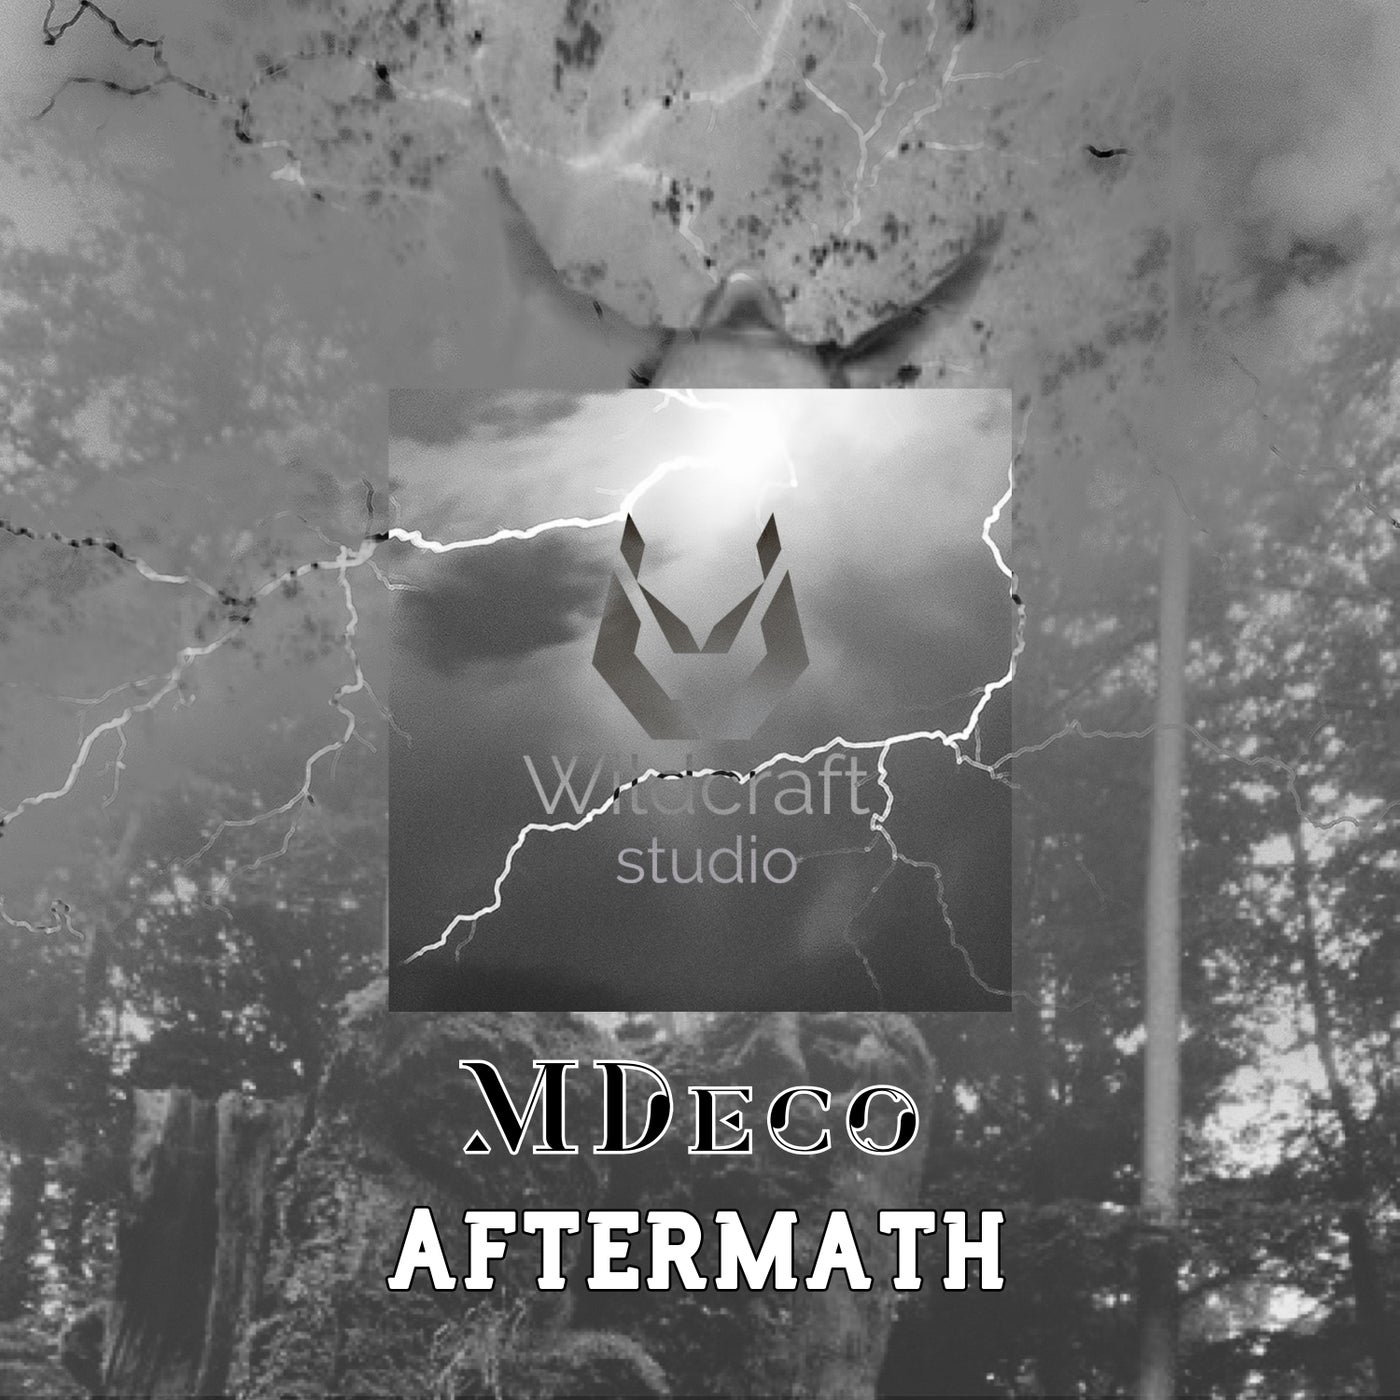 MDeco music download - Beatport